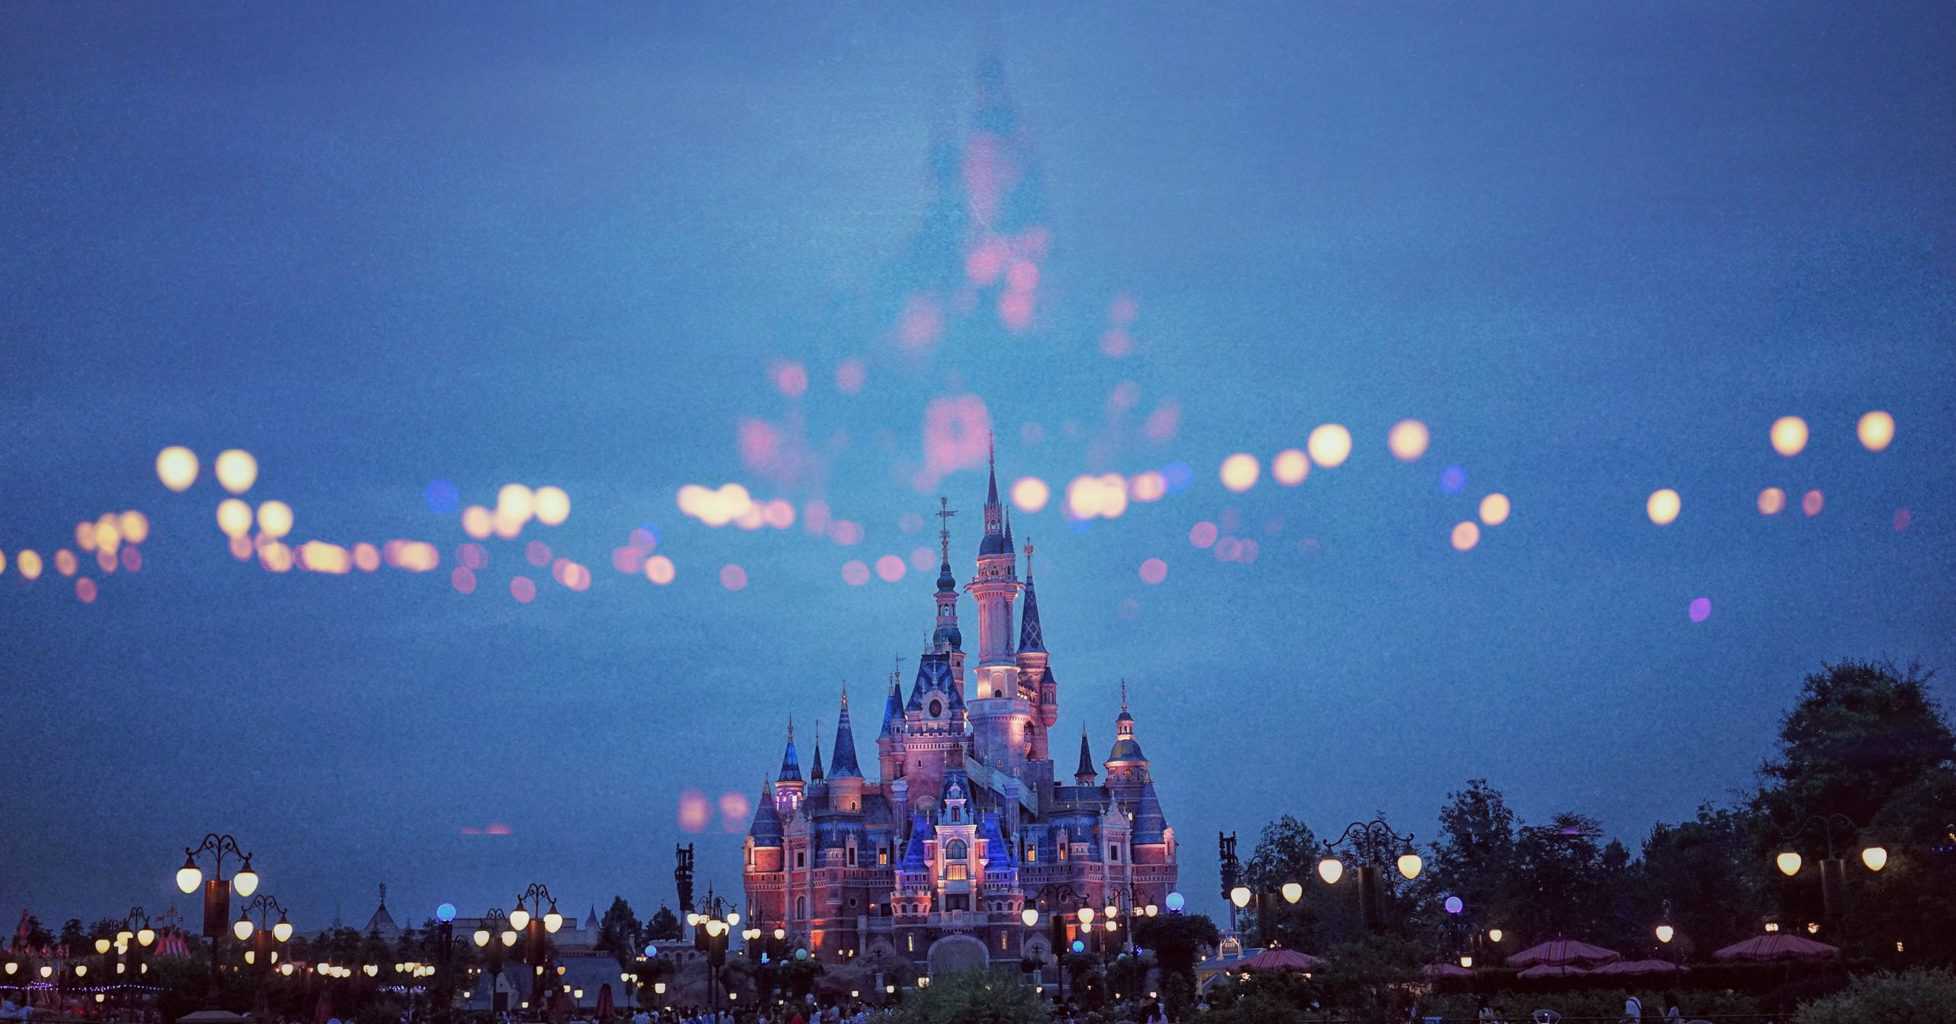 Disneyland's castle at night